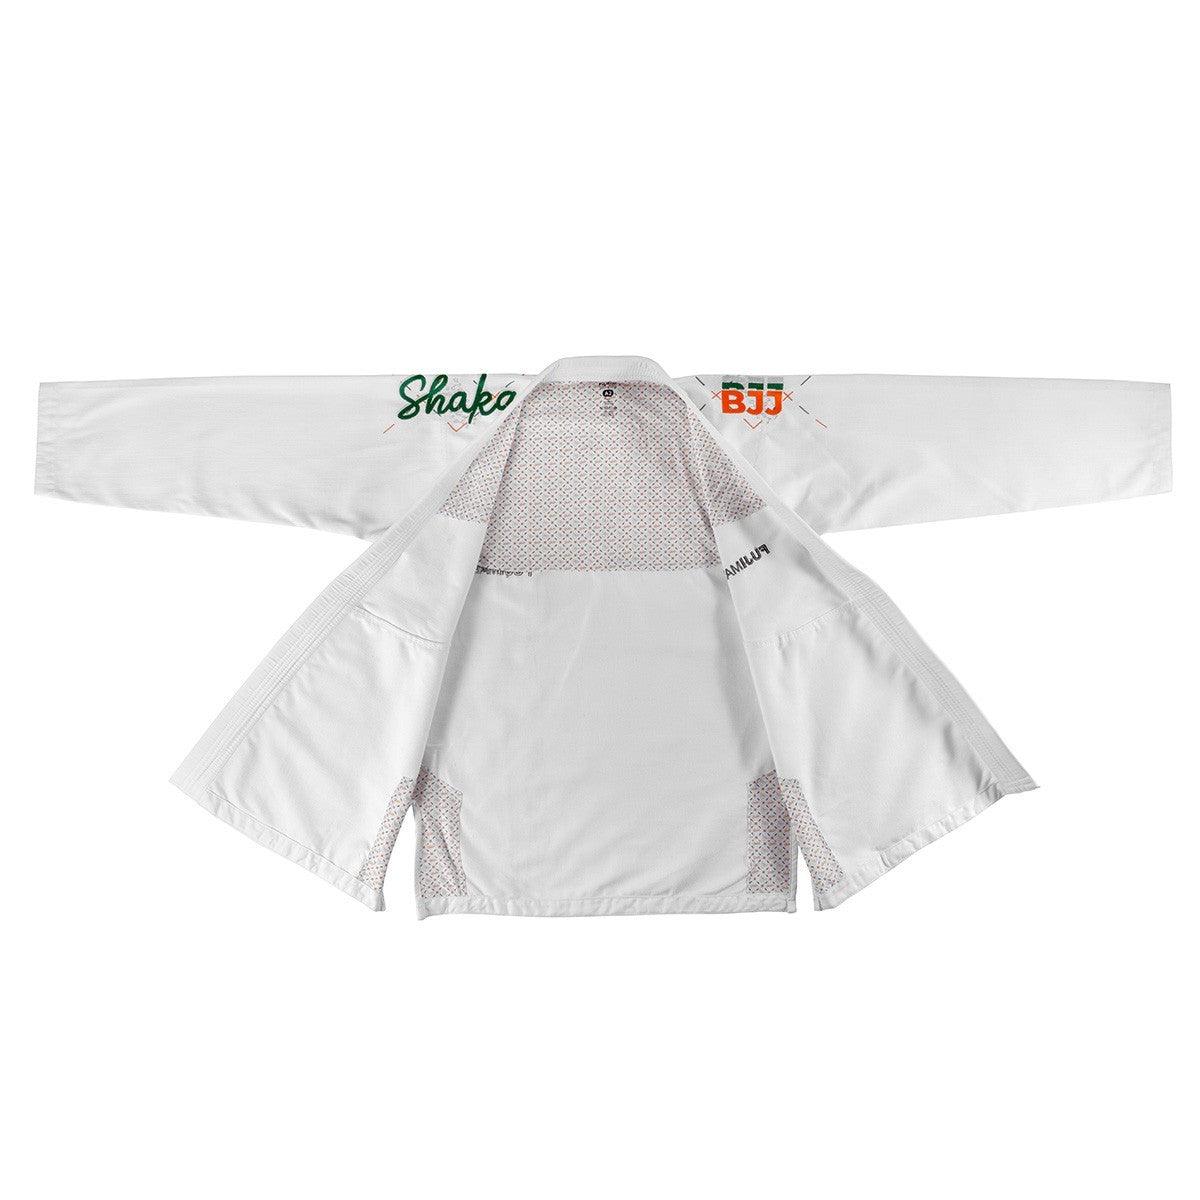 Brazilian Jiu Jitsu Gi Fuji Mae Shaka 2.0 - Blanc/Vert 104334